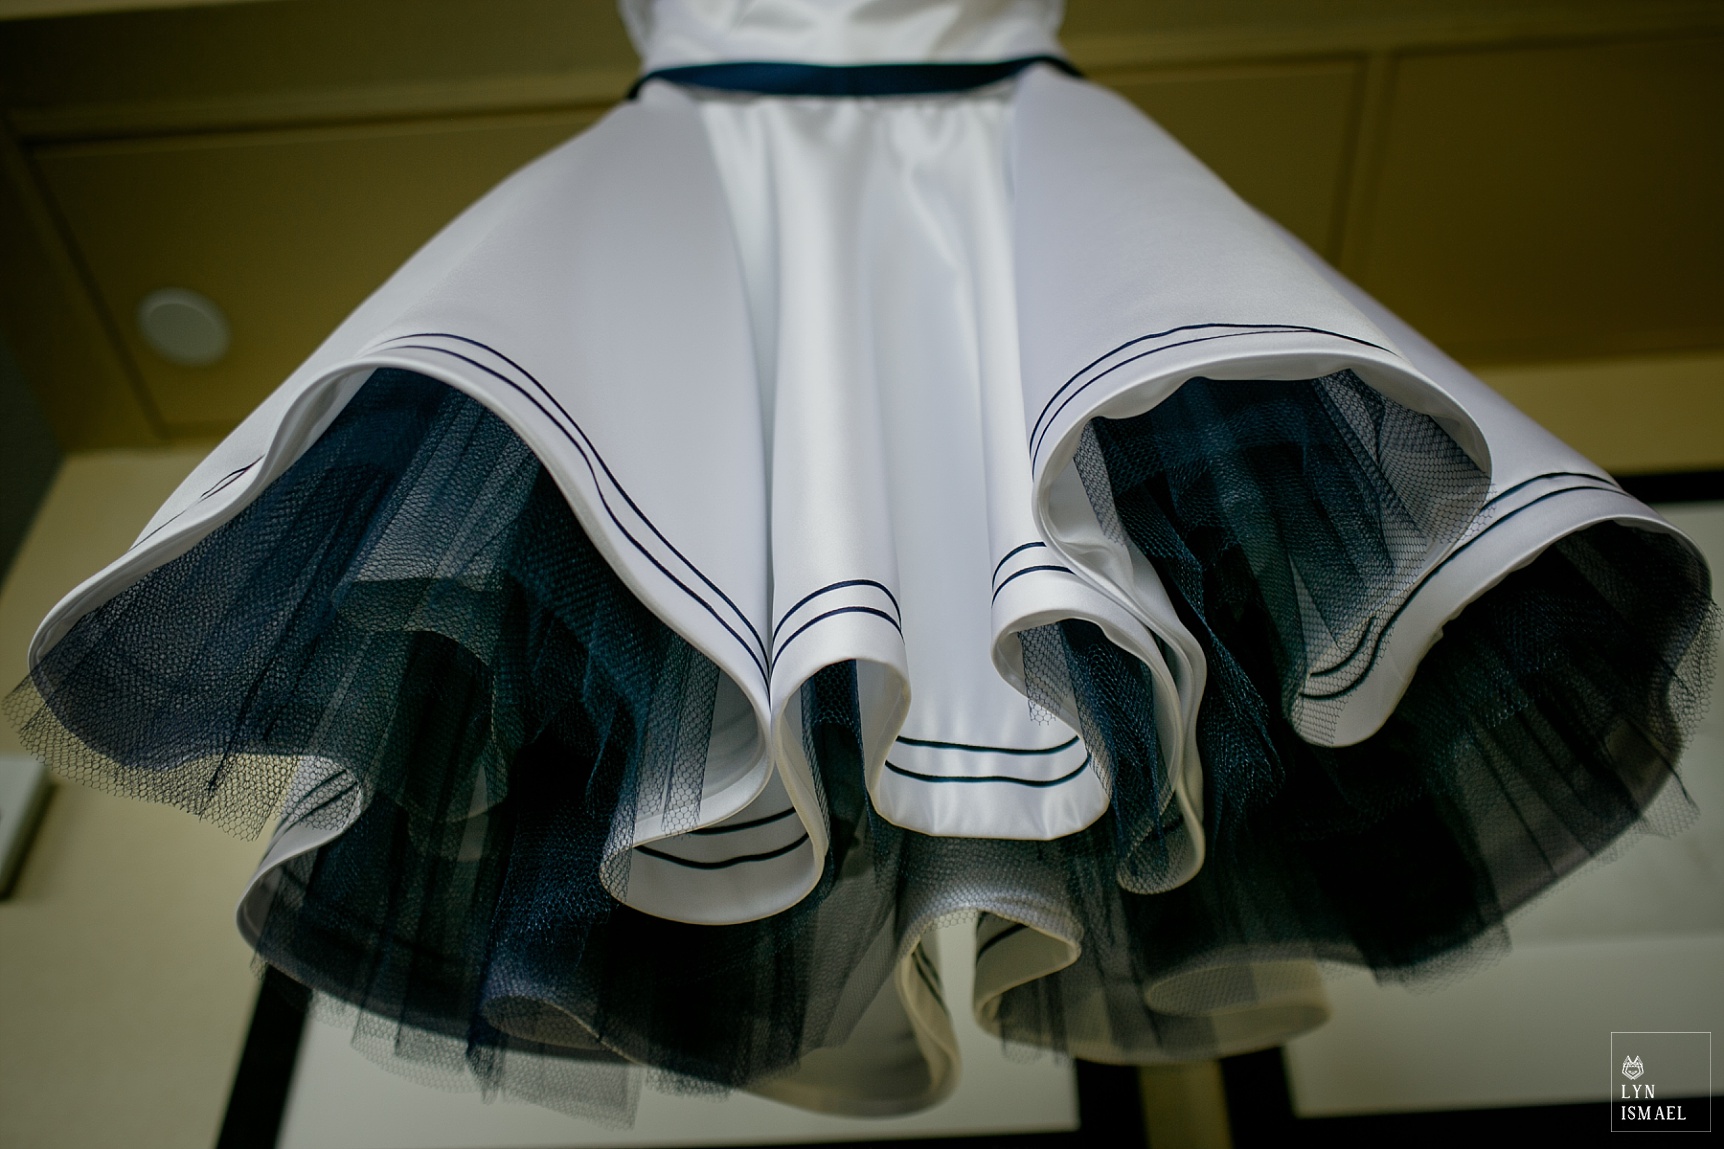 Custom designe'd wedding dress with navy blue crinoline